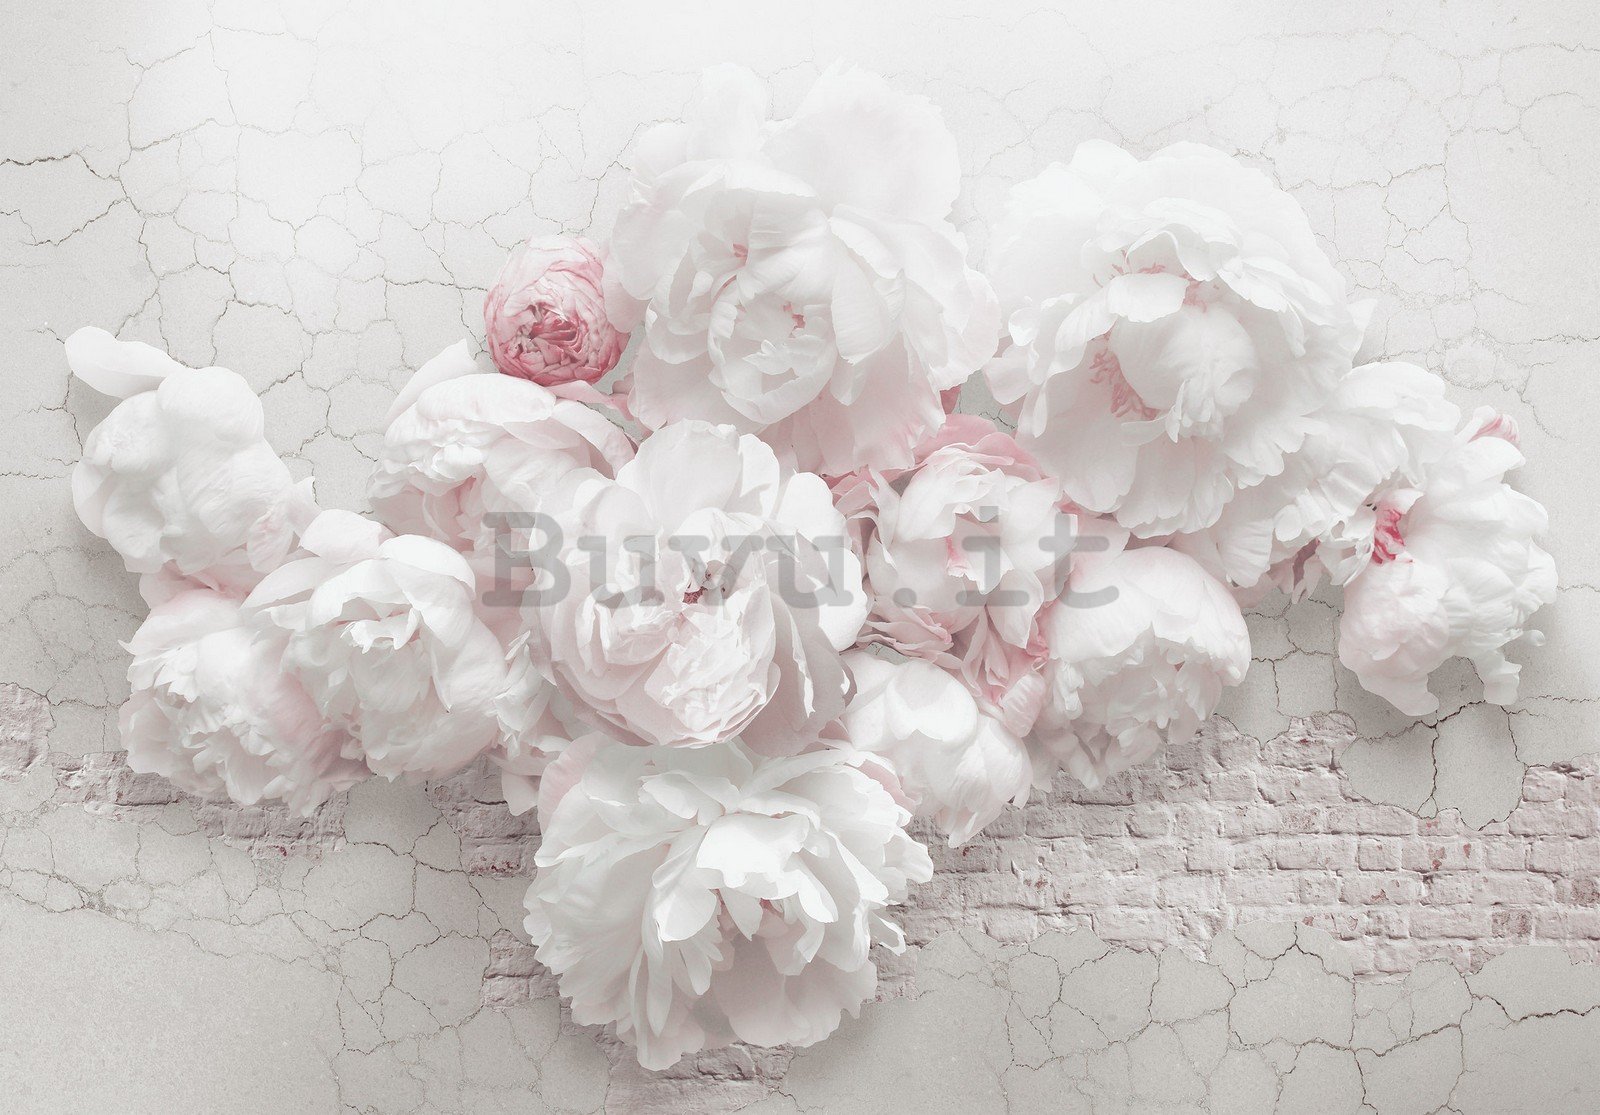 Fotomurale in TNT: Rose bianche sulla parete - 416x254 cm